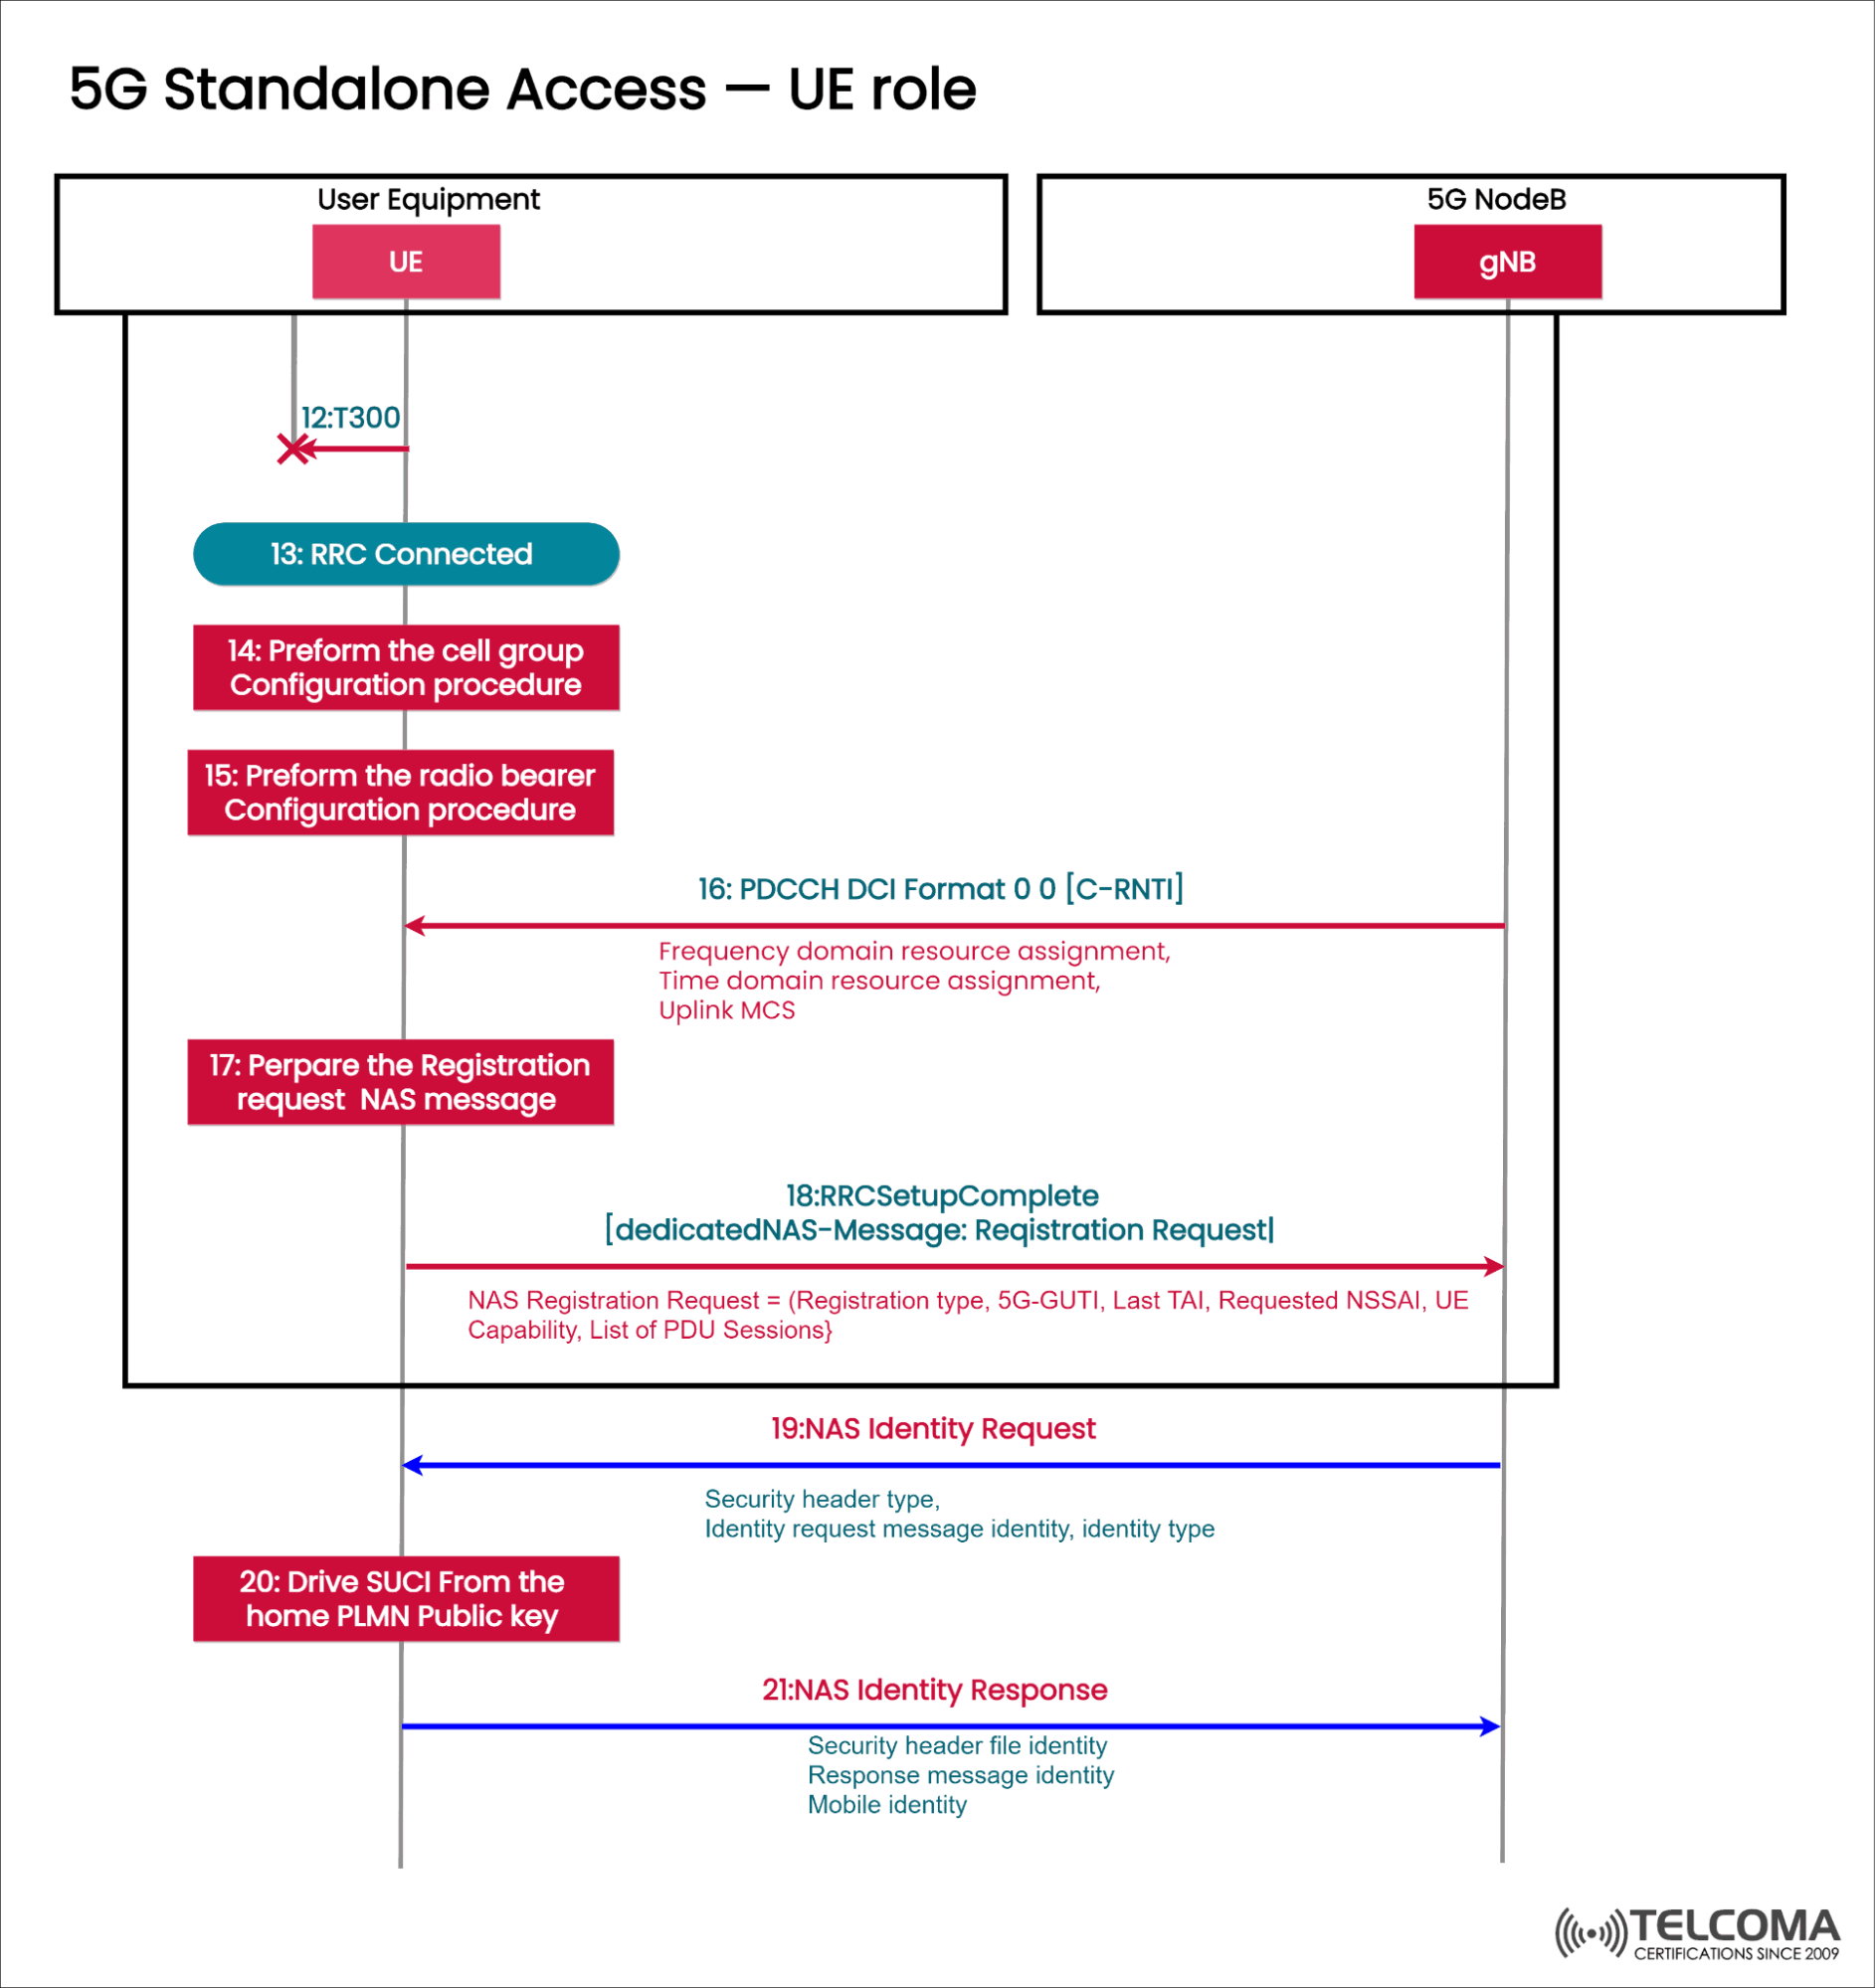 ue role in 5g standalone access